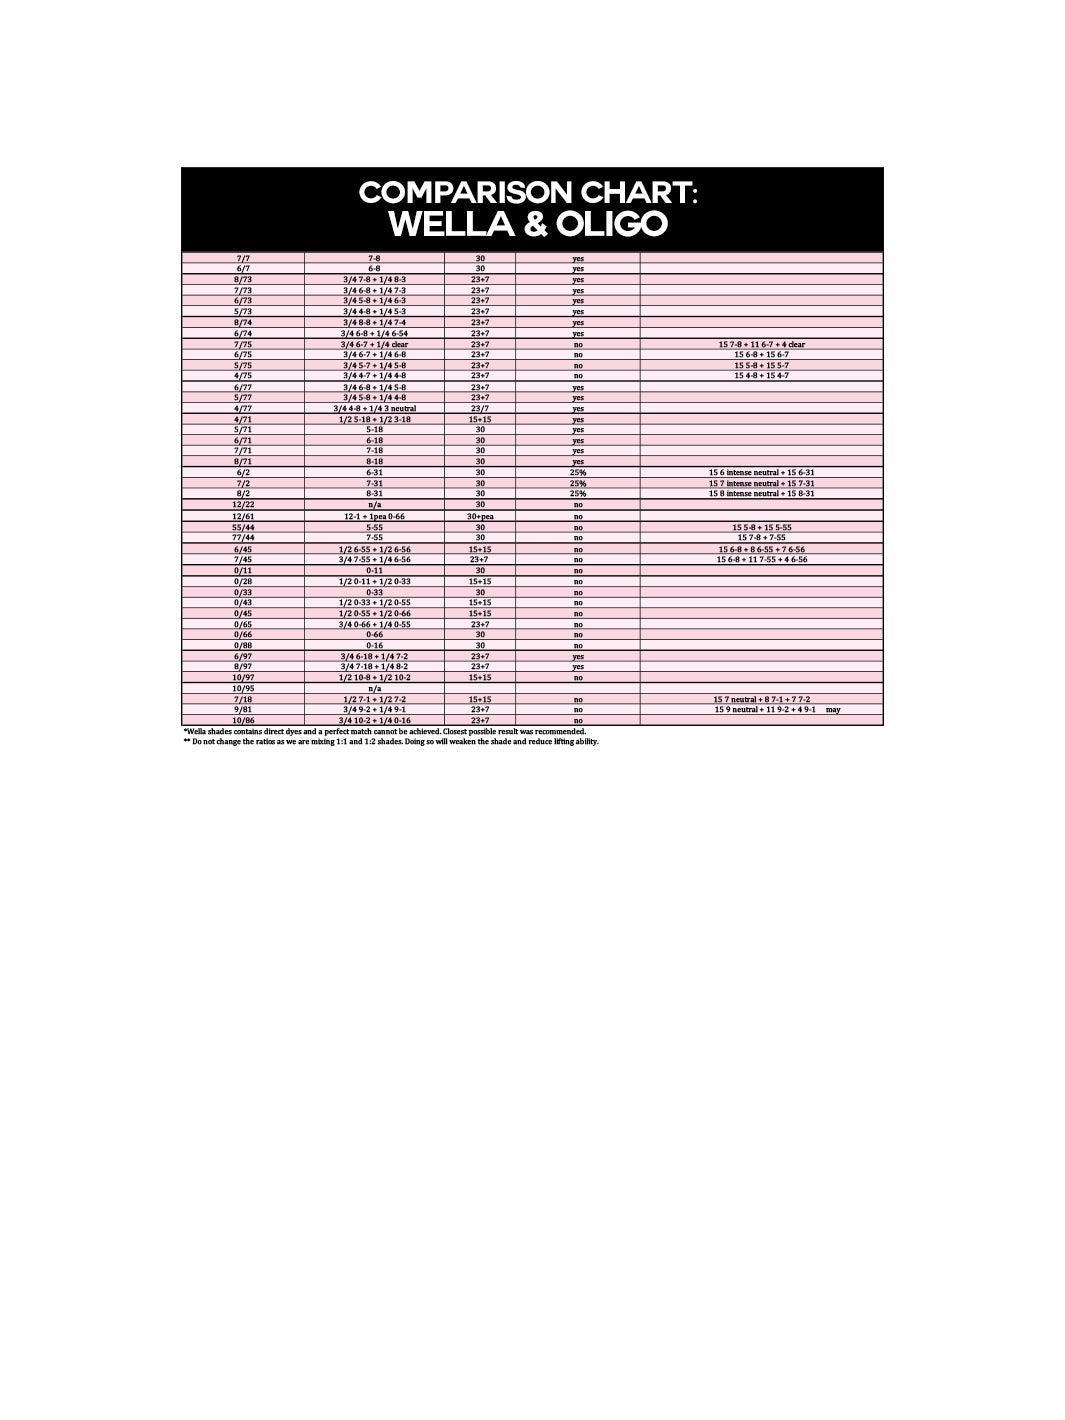 OLIGO COMPARISON CHARTS - Calura Permanent  (digital copy)